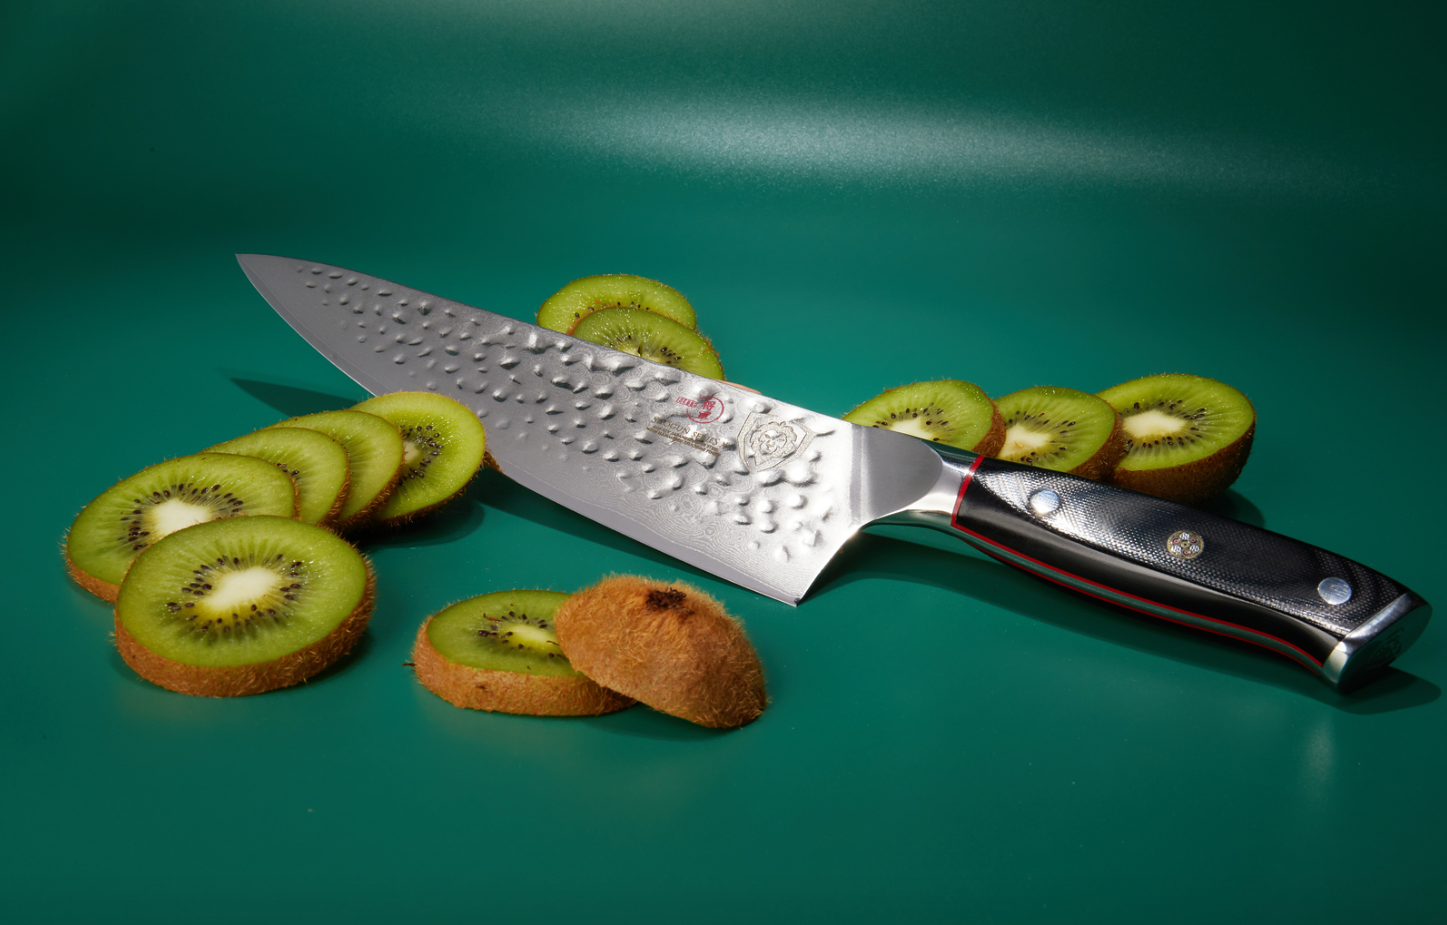 Kiwi Stainless Steel Knife No. 171